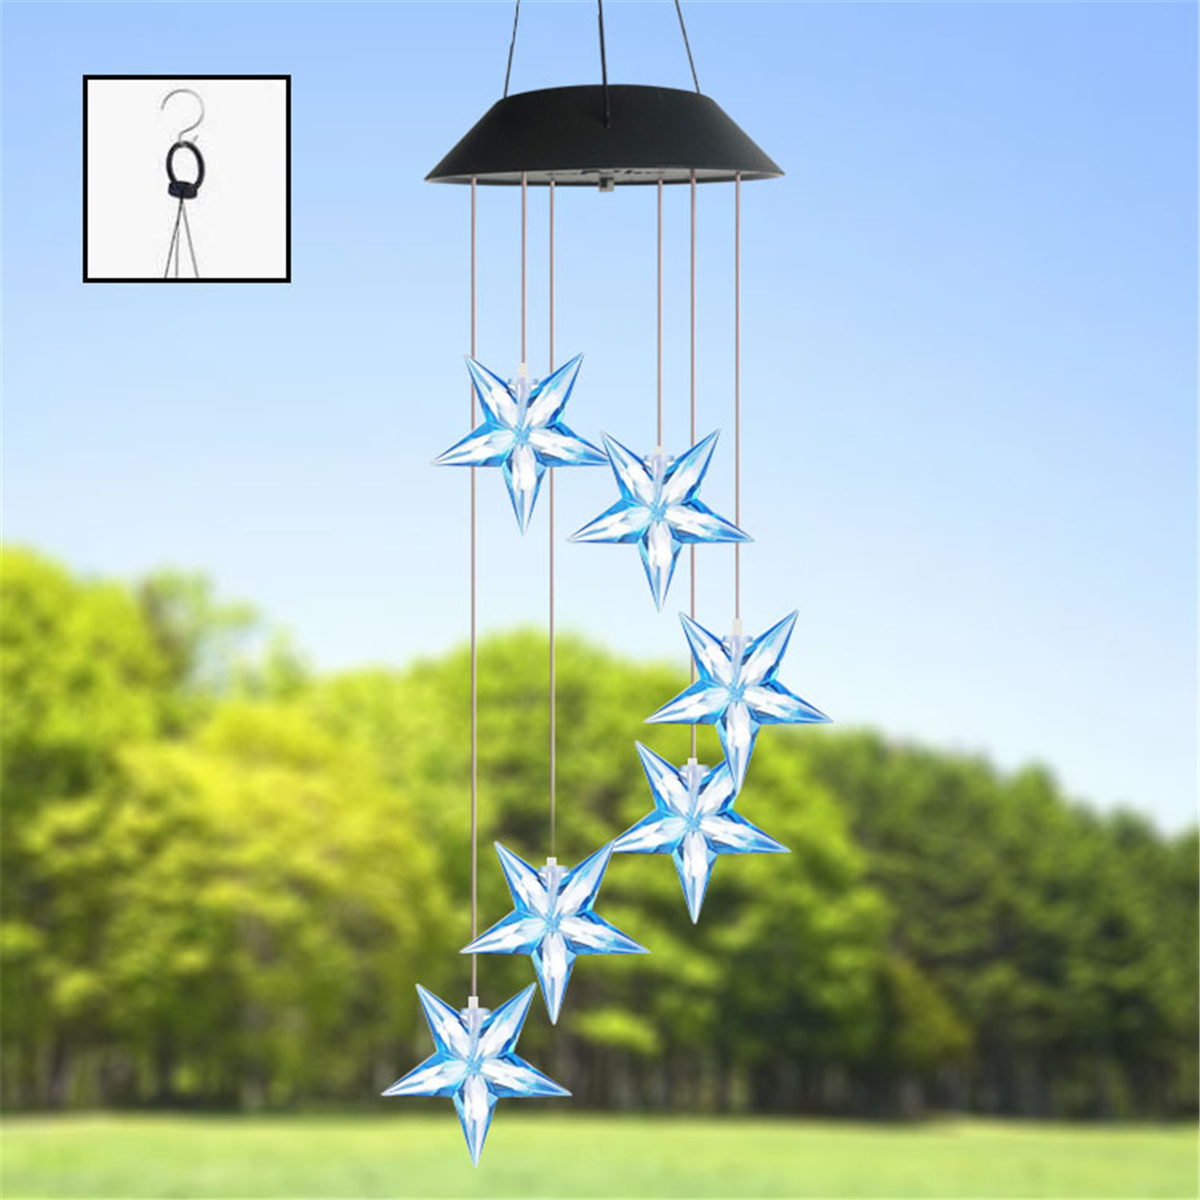 Solor-Powered-Star-Wind-Chime-Light-Outdoor-Garden-Waterproof-Hanging-Lamp-Decor-1698743-4